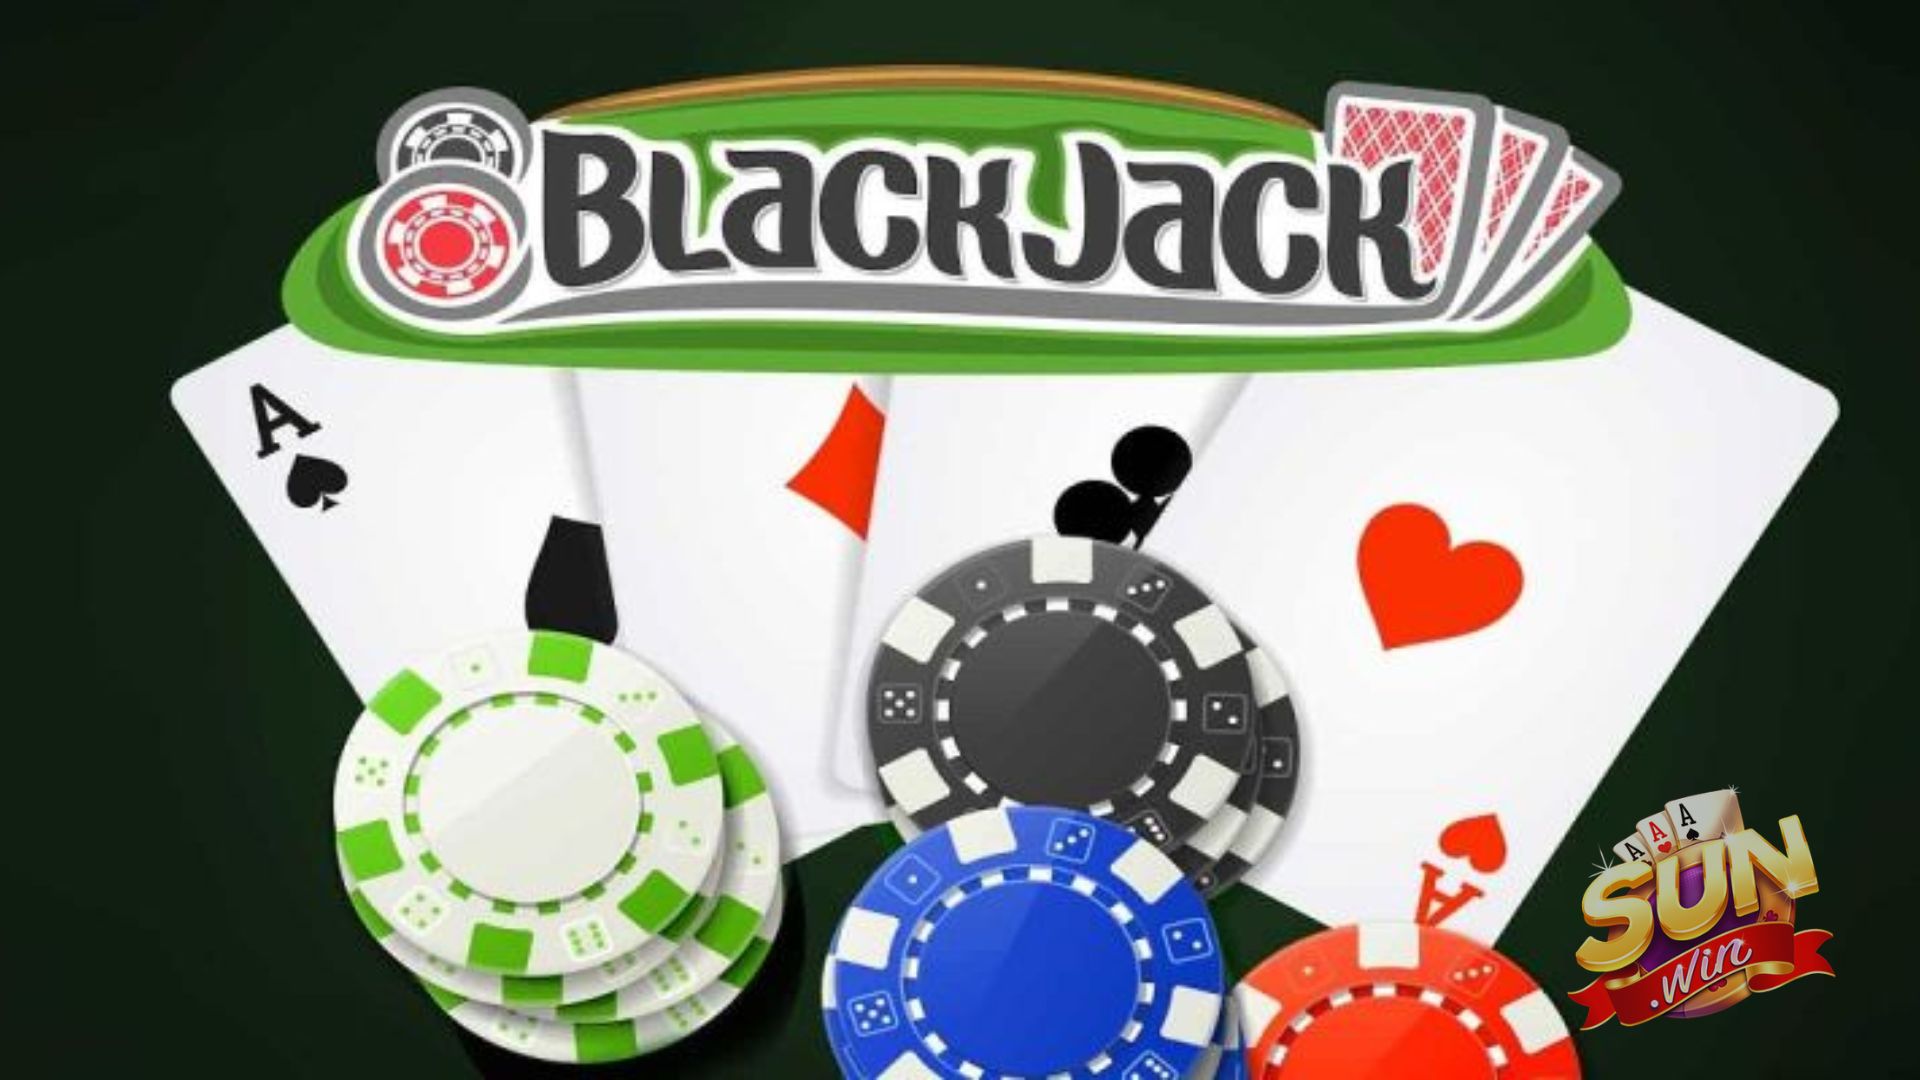 blackjack sunwin 4